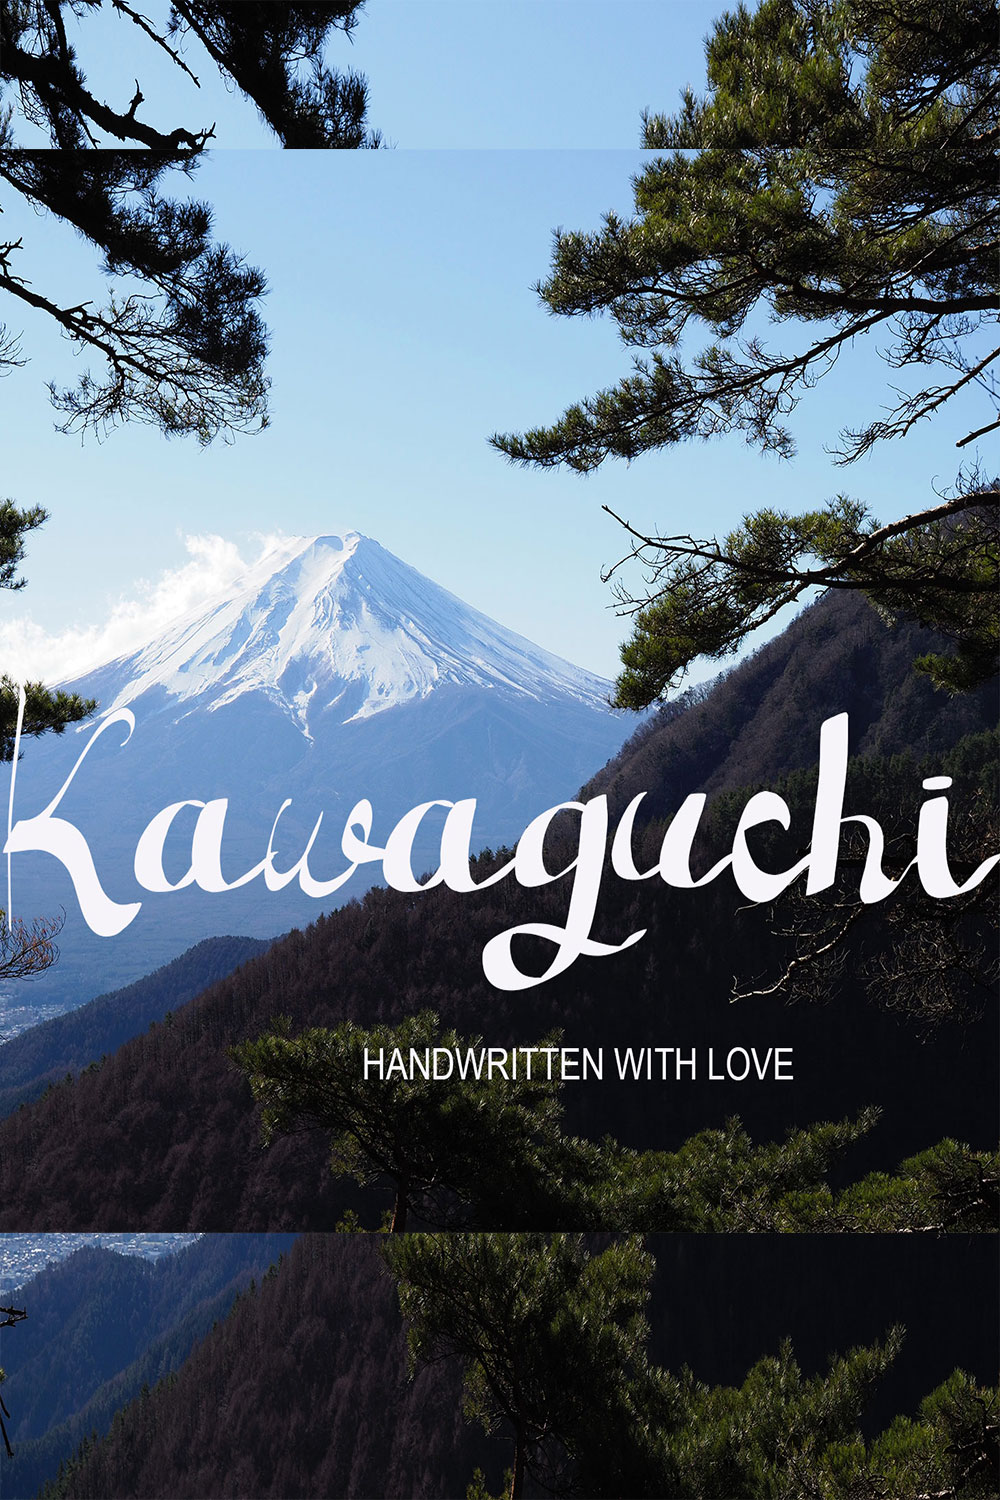 Kawaguchi Sans Serif Font Pinterest image.